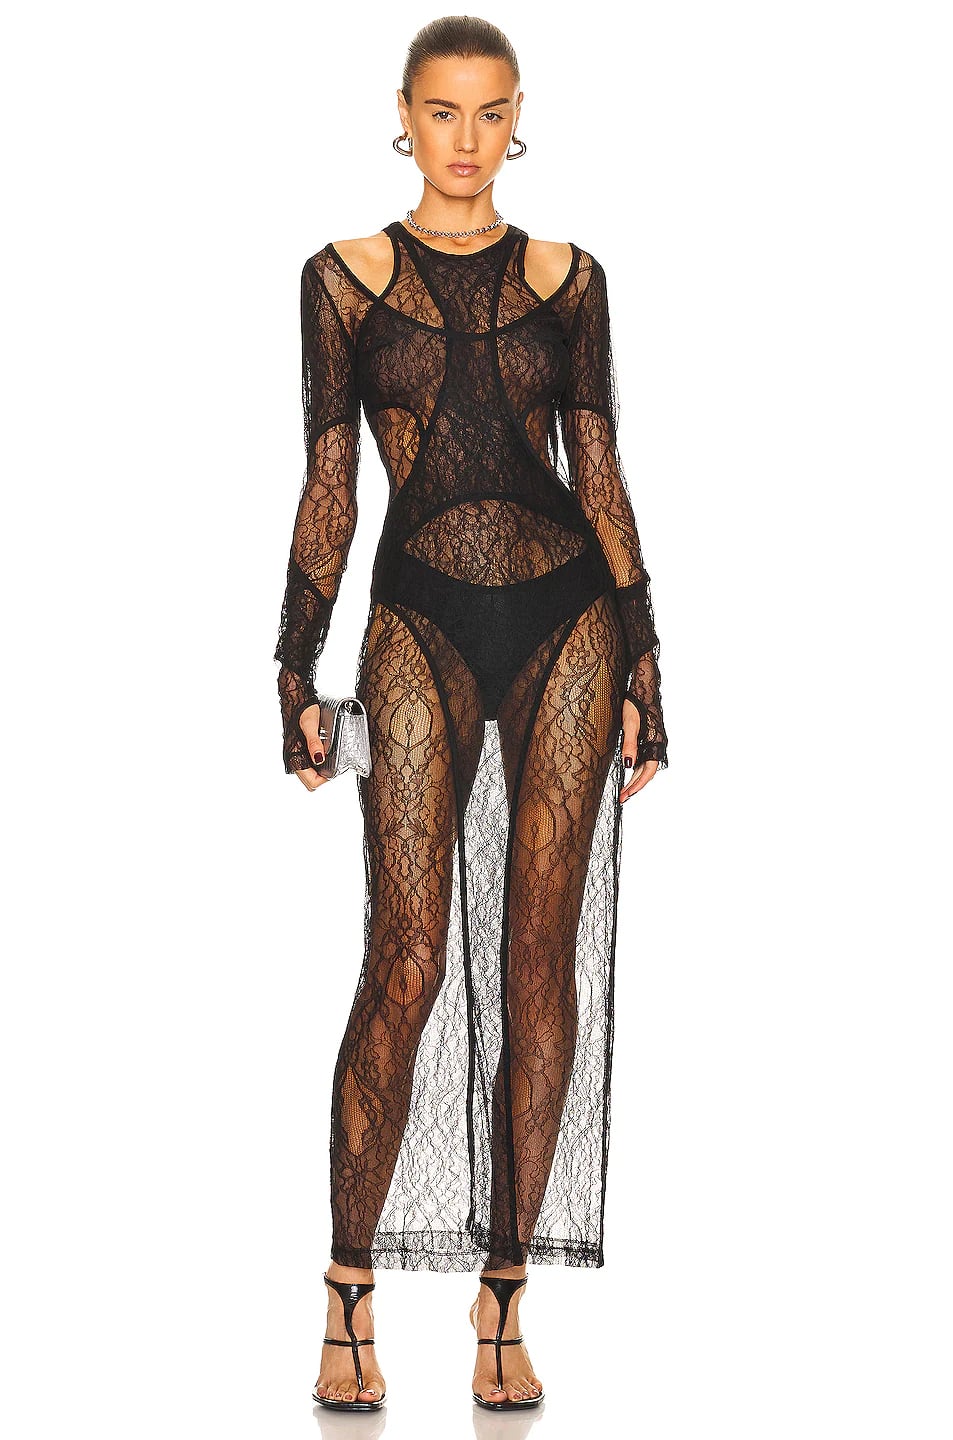 Kylie Jenner Goes Sheer in Mugler Dress at CFDA Fashion Awards 2022 – WWD